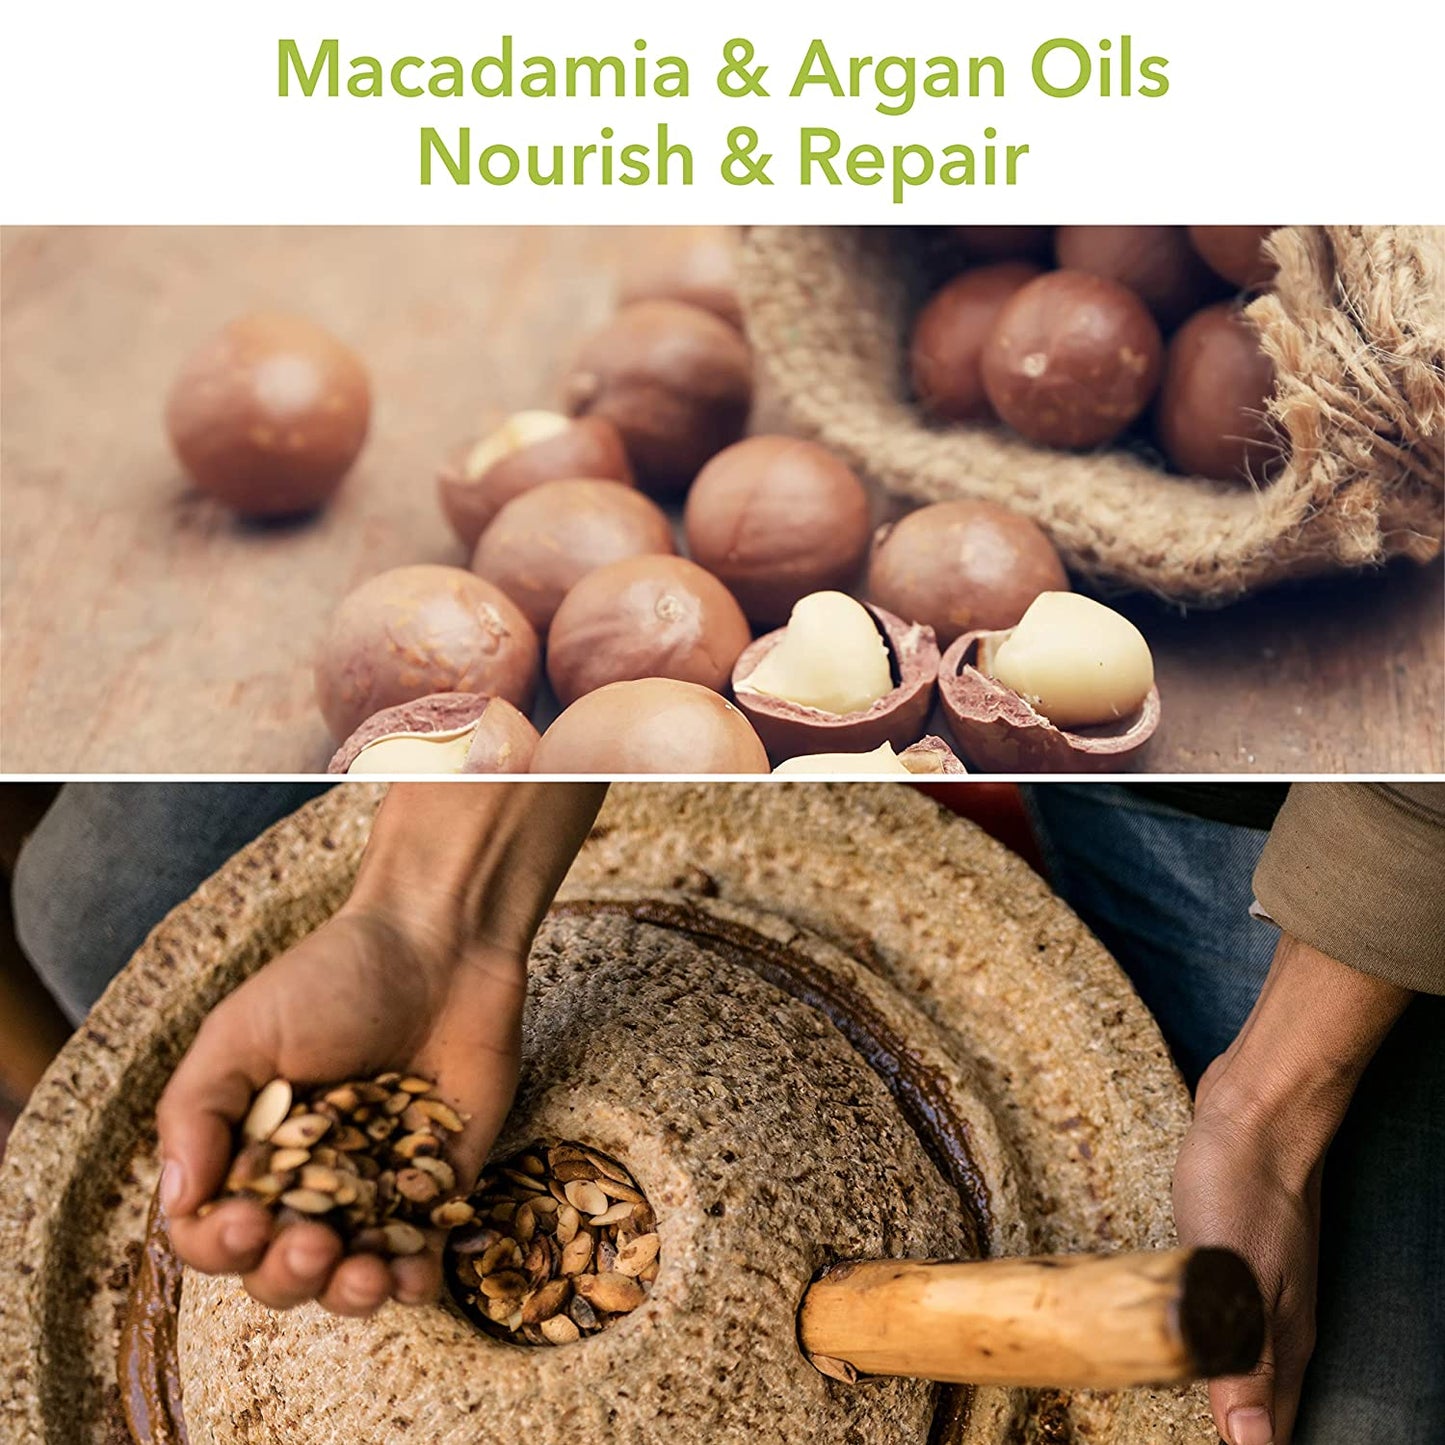 Macadamia & argan